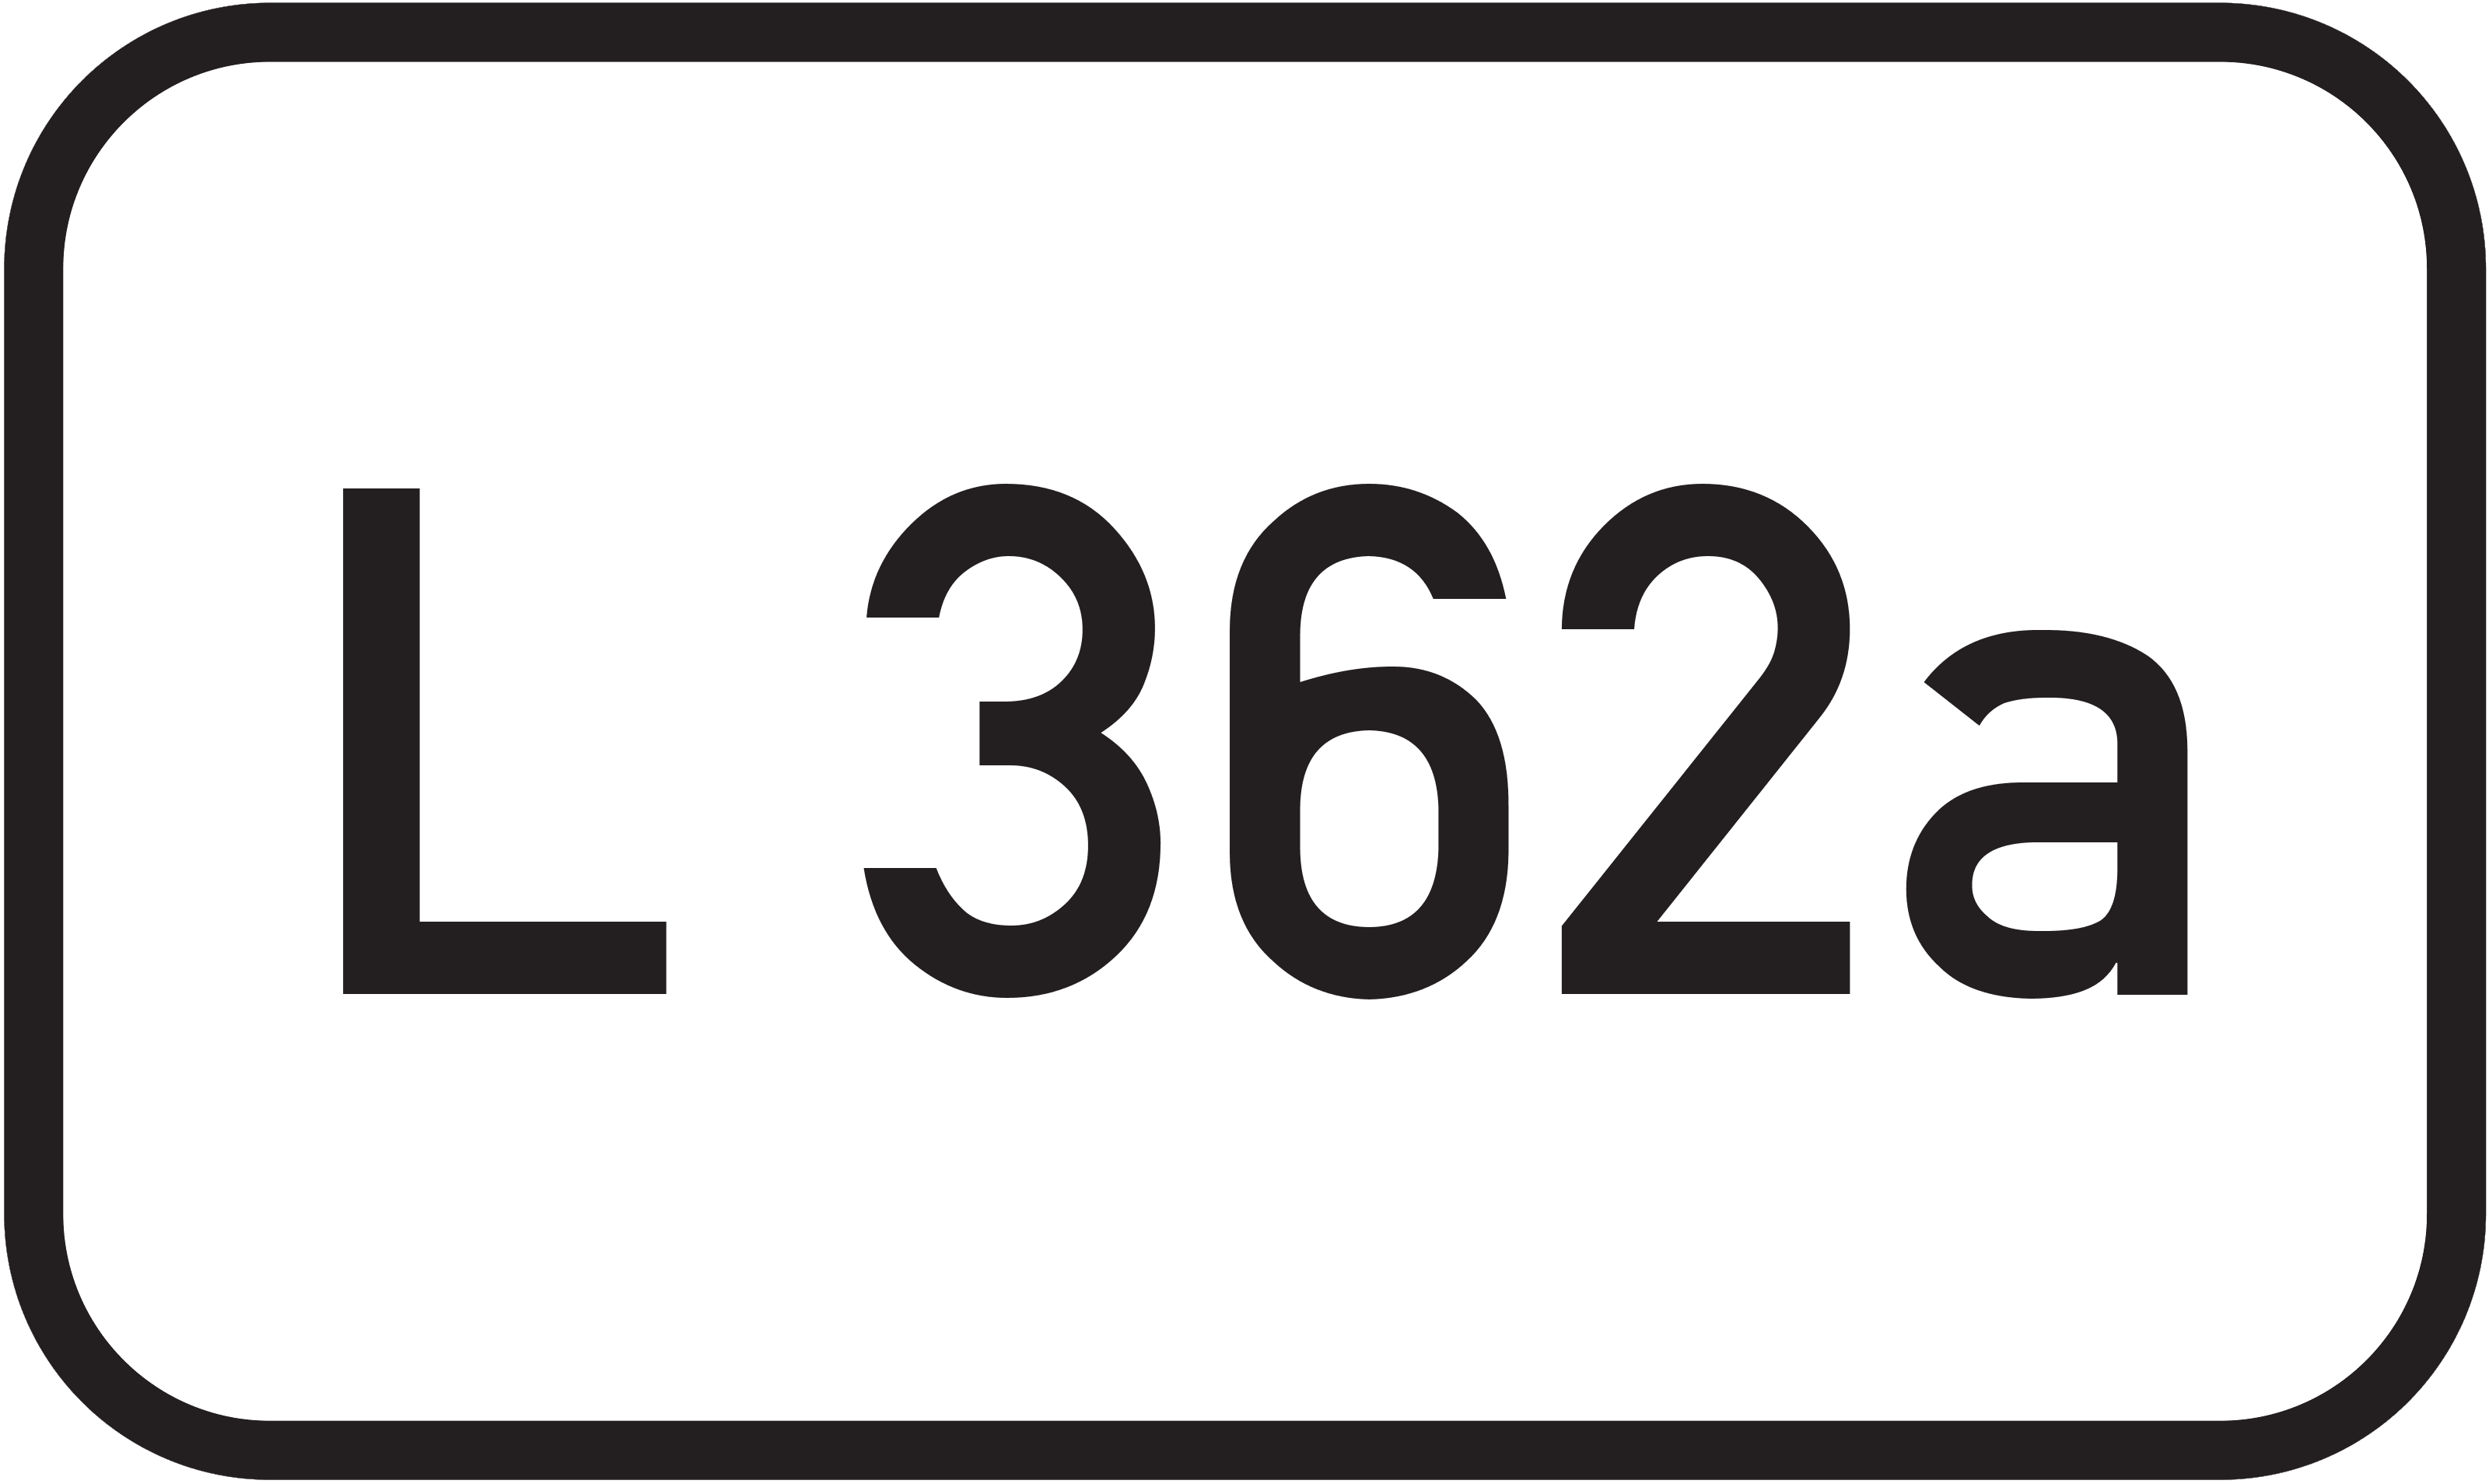 Landesstraße L 362a